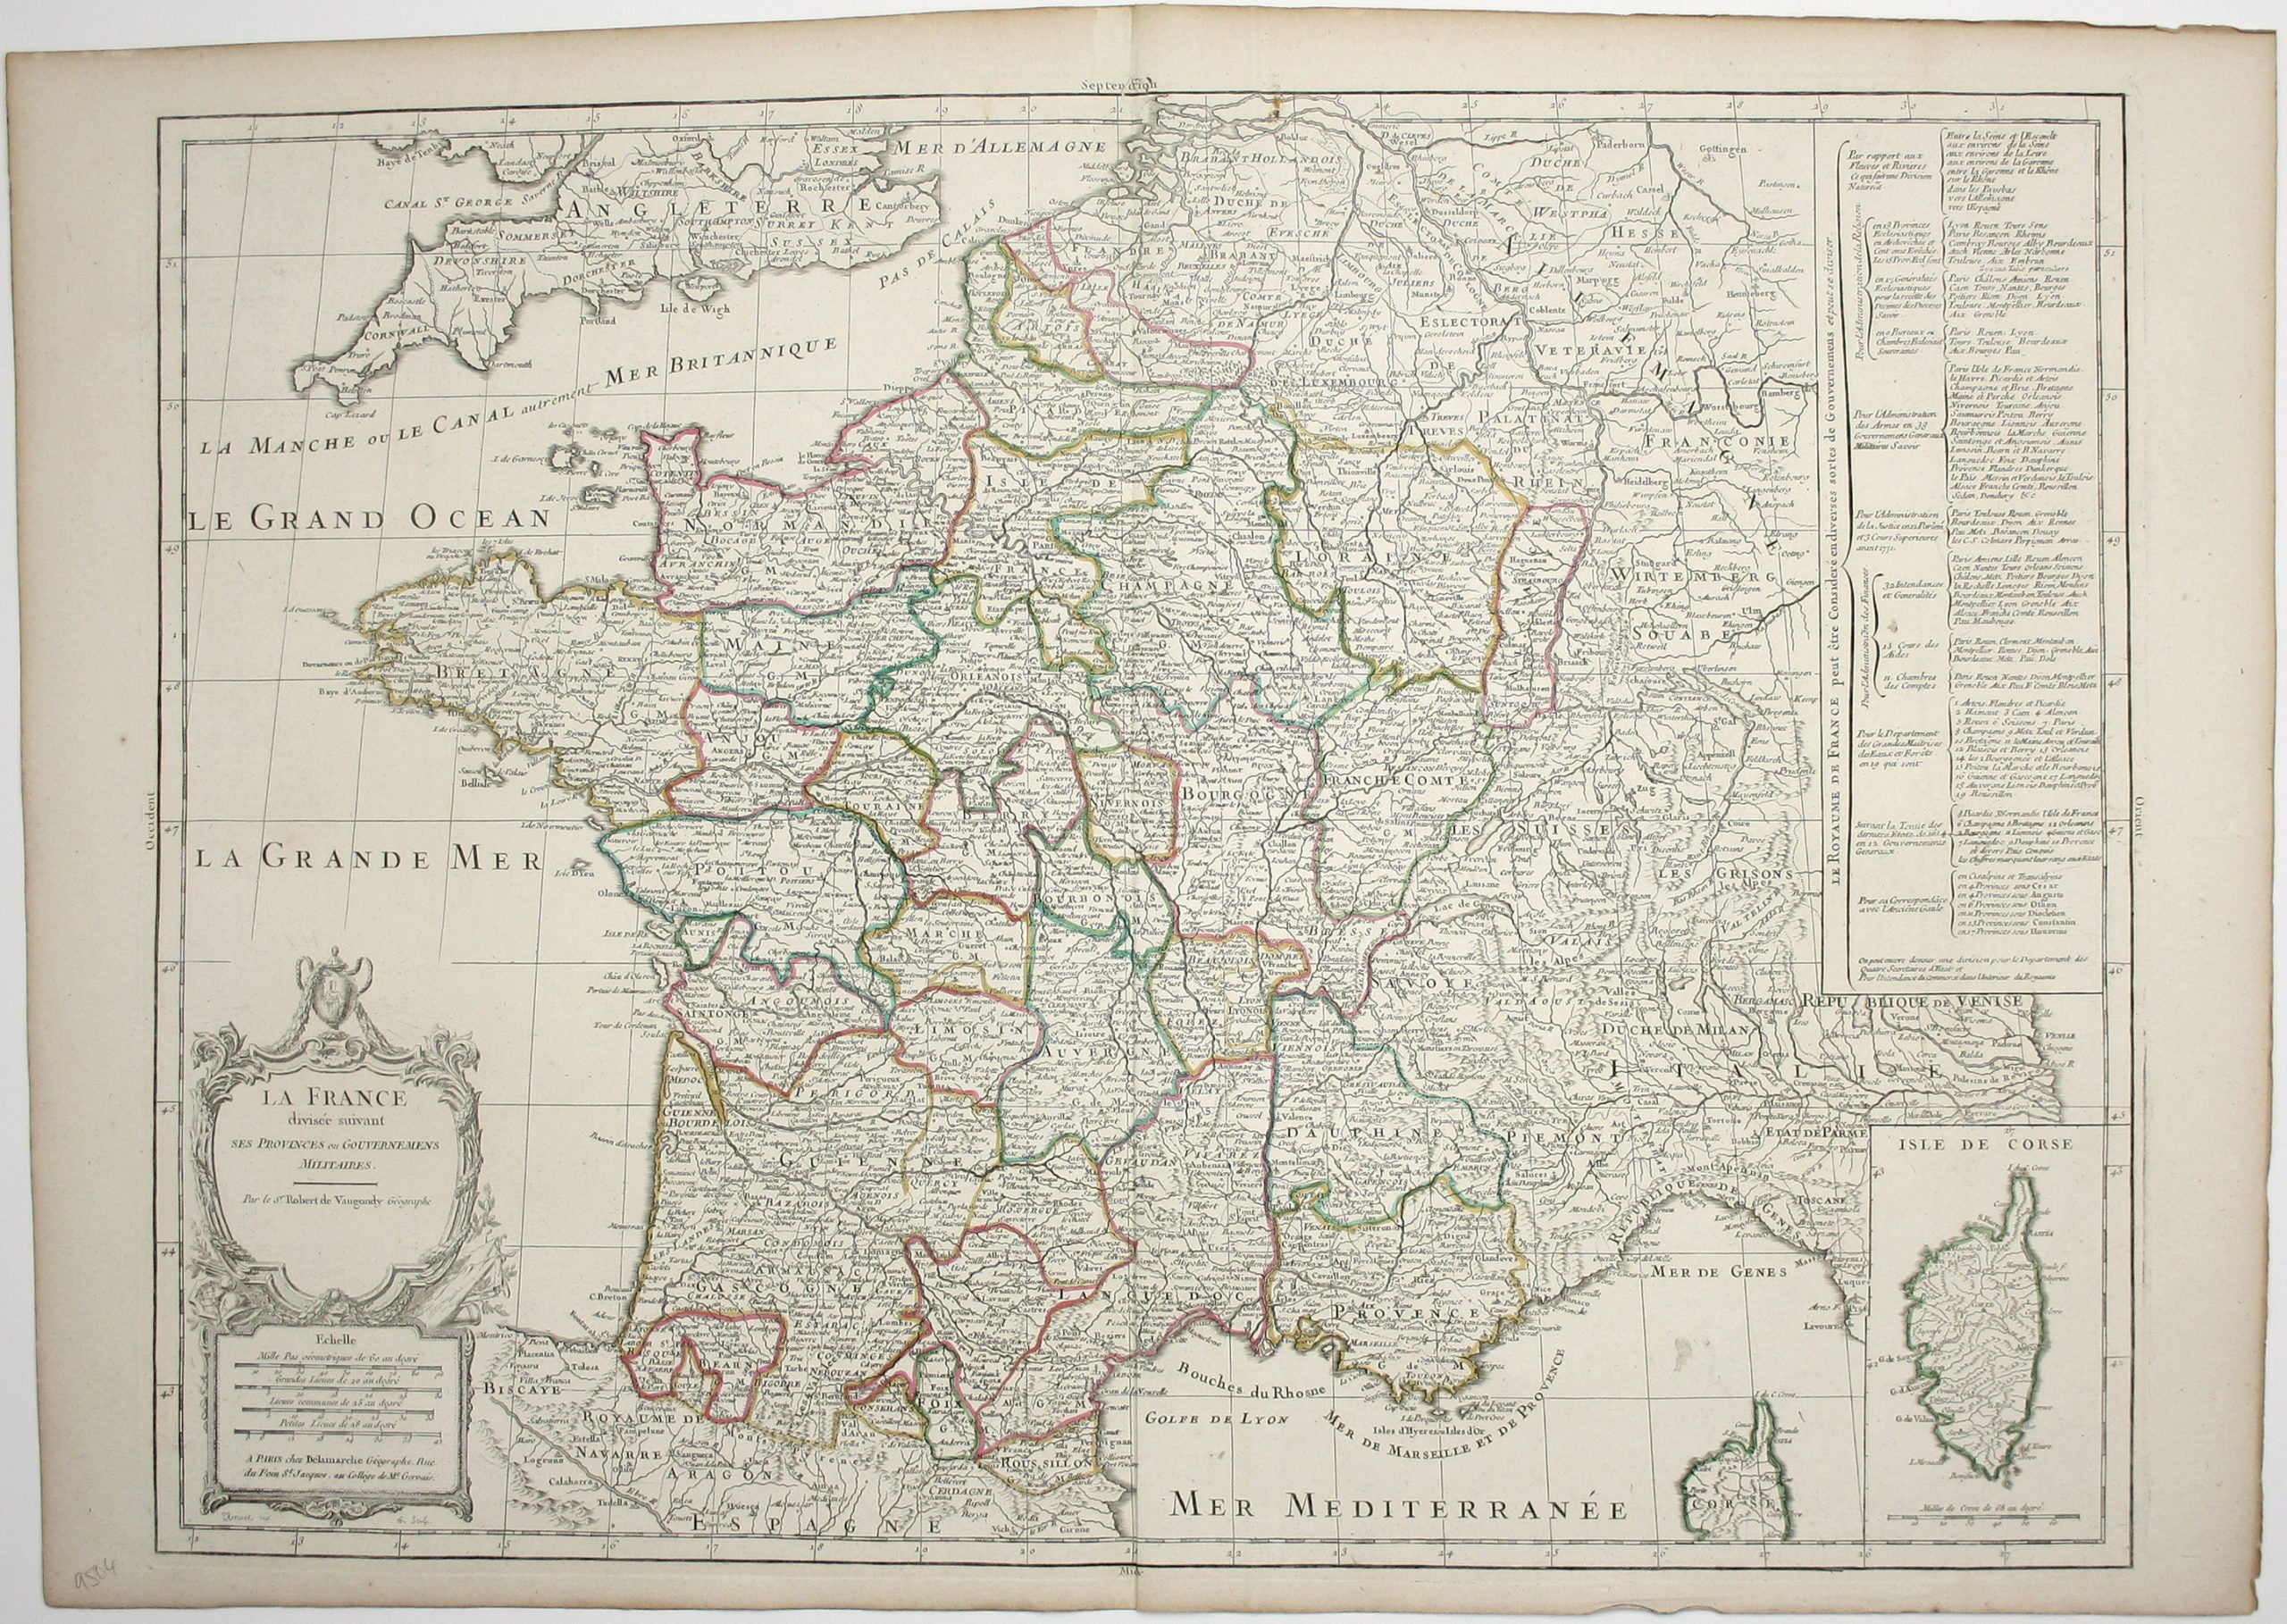 Robert de Vaugondy’s Map of France